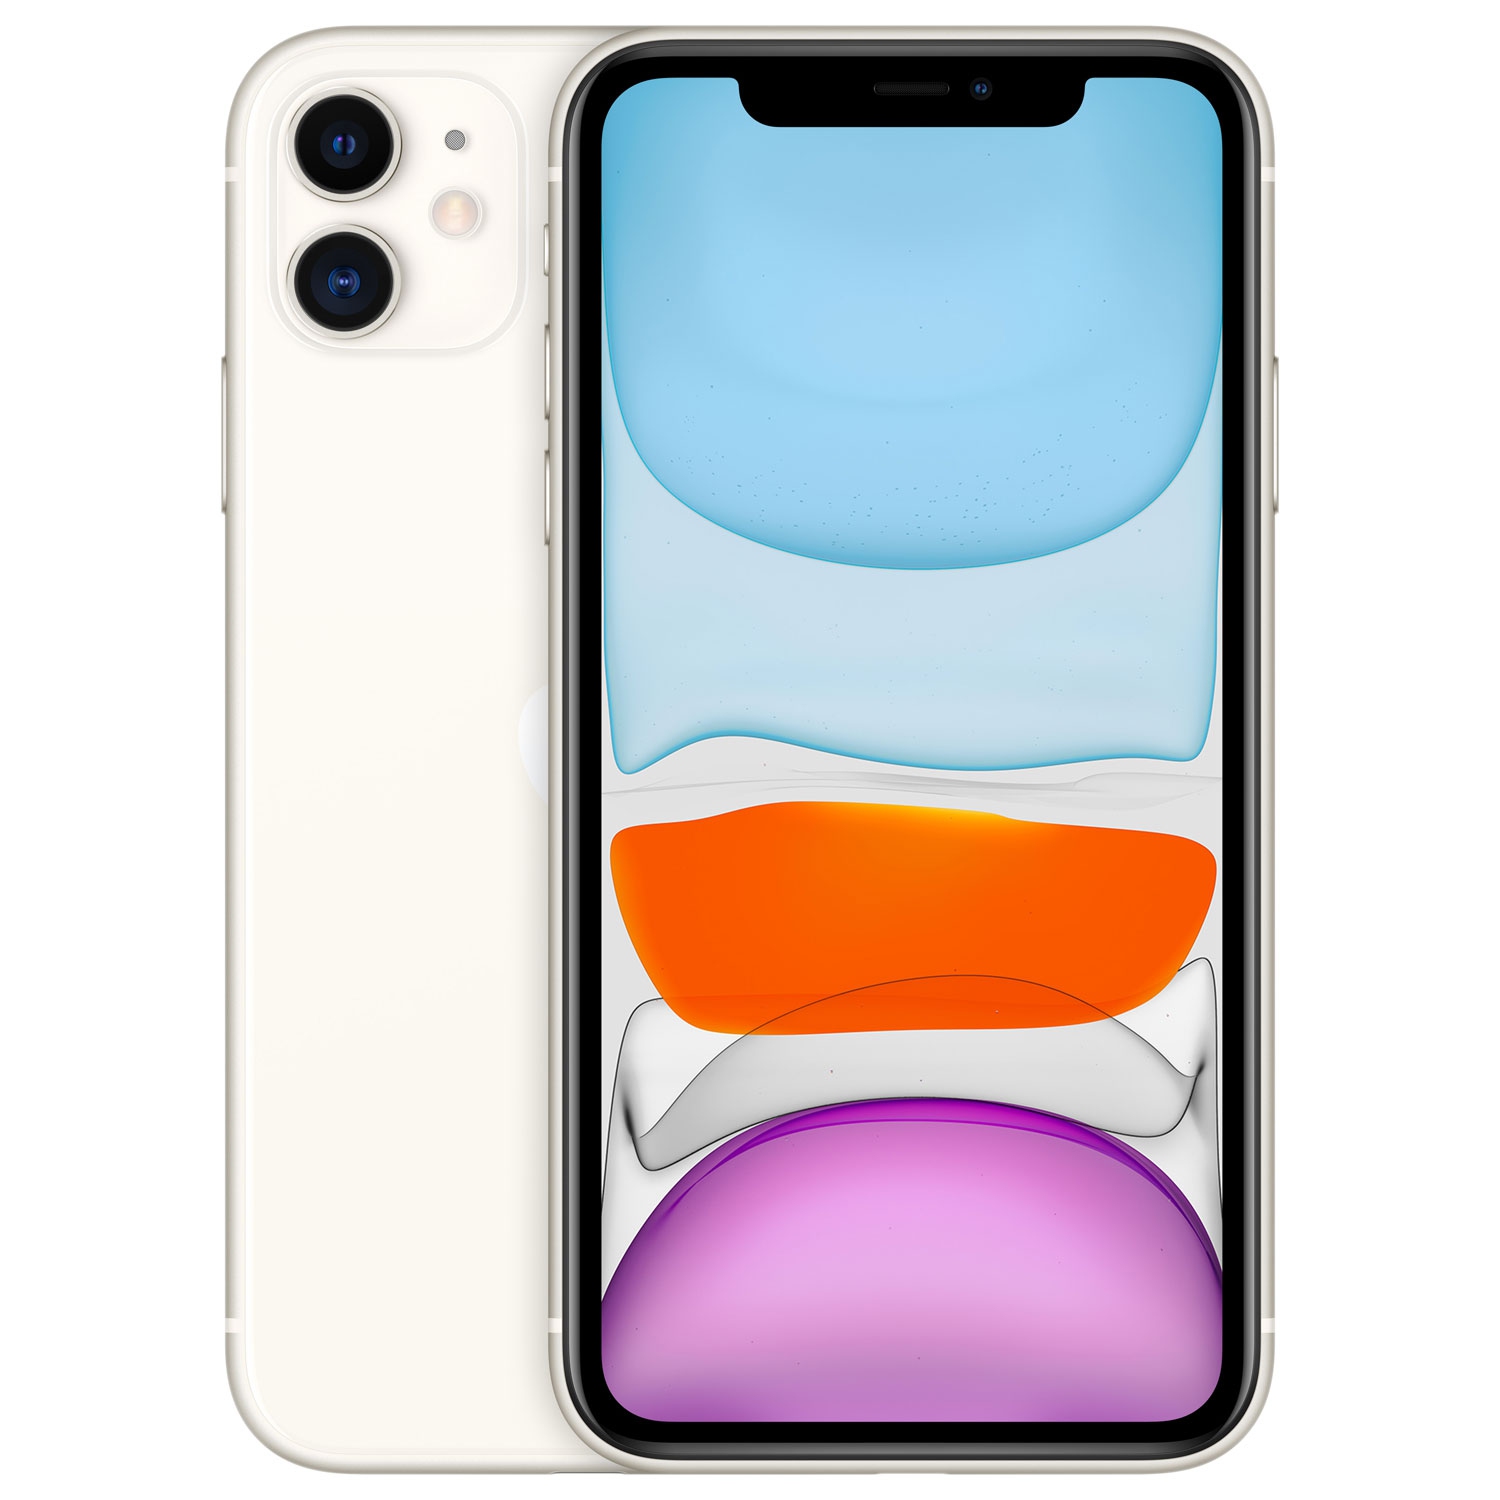 Refurbished (Fair) - Apple iPhone 11 64GB - White - Unlocked